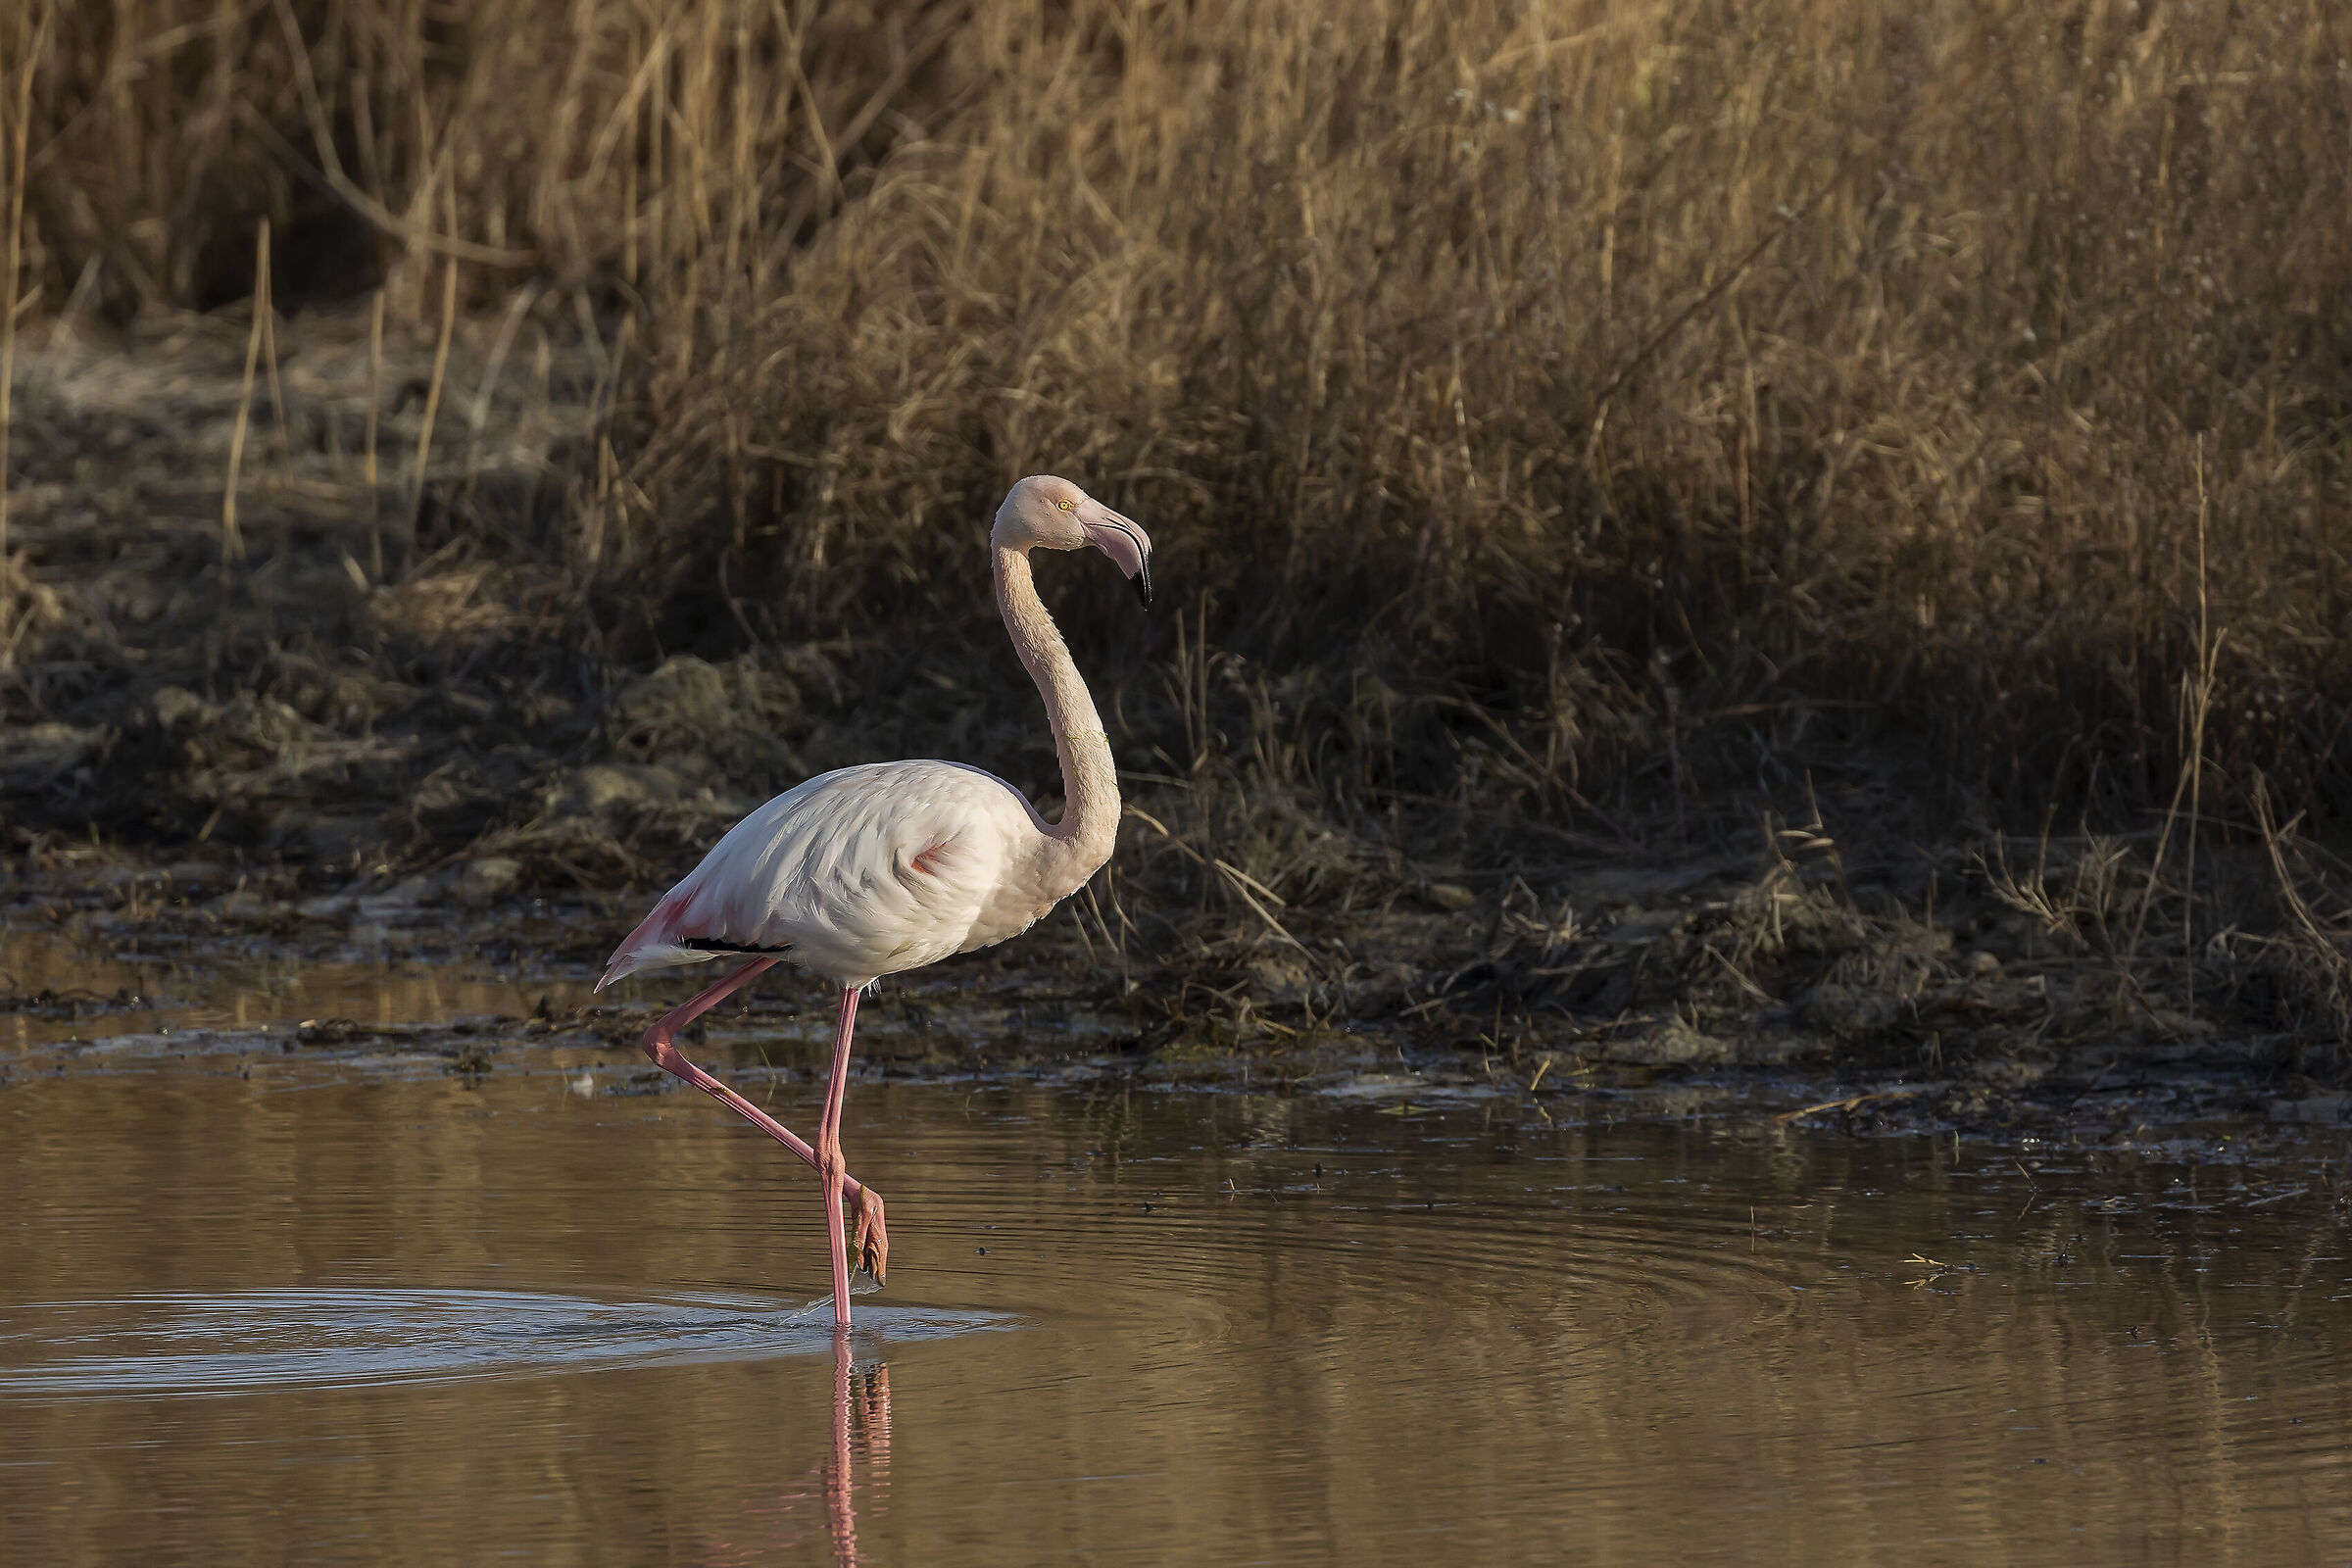 Pink flamingo...